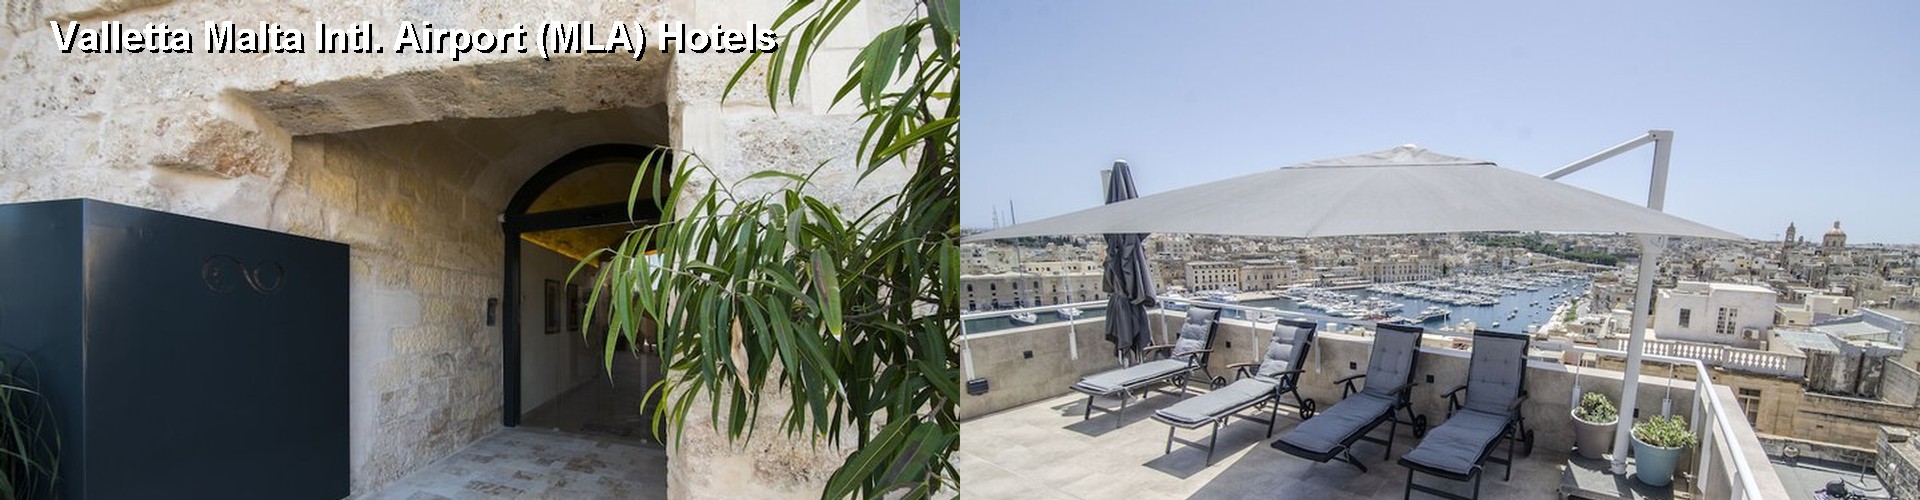 5 Best Hotels near Valletta Malta Intl. Airport (MLA)